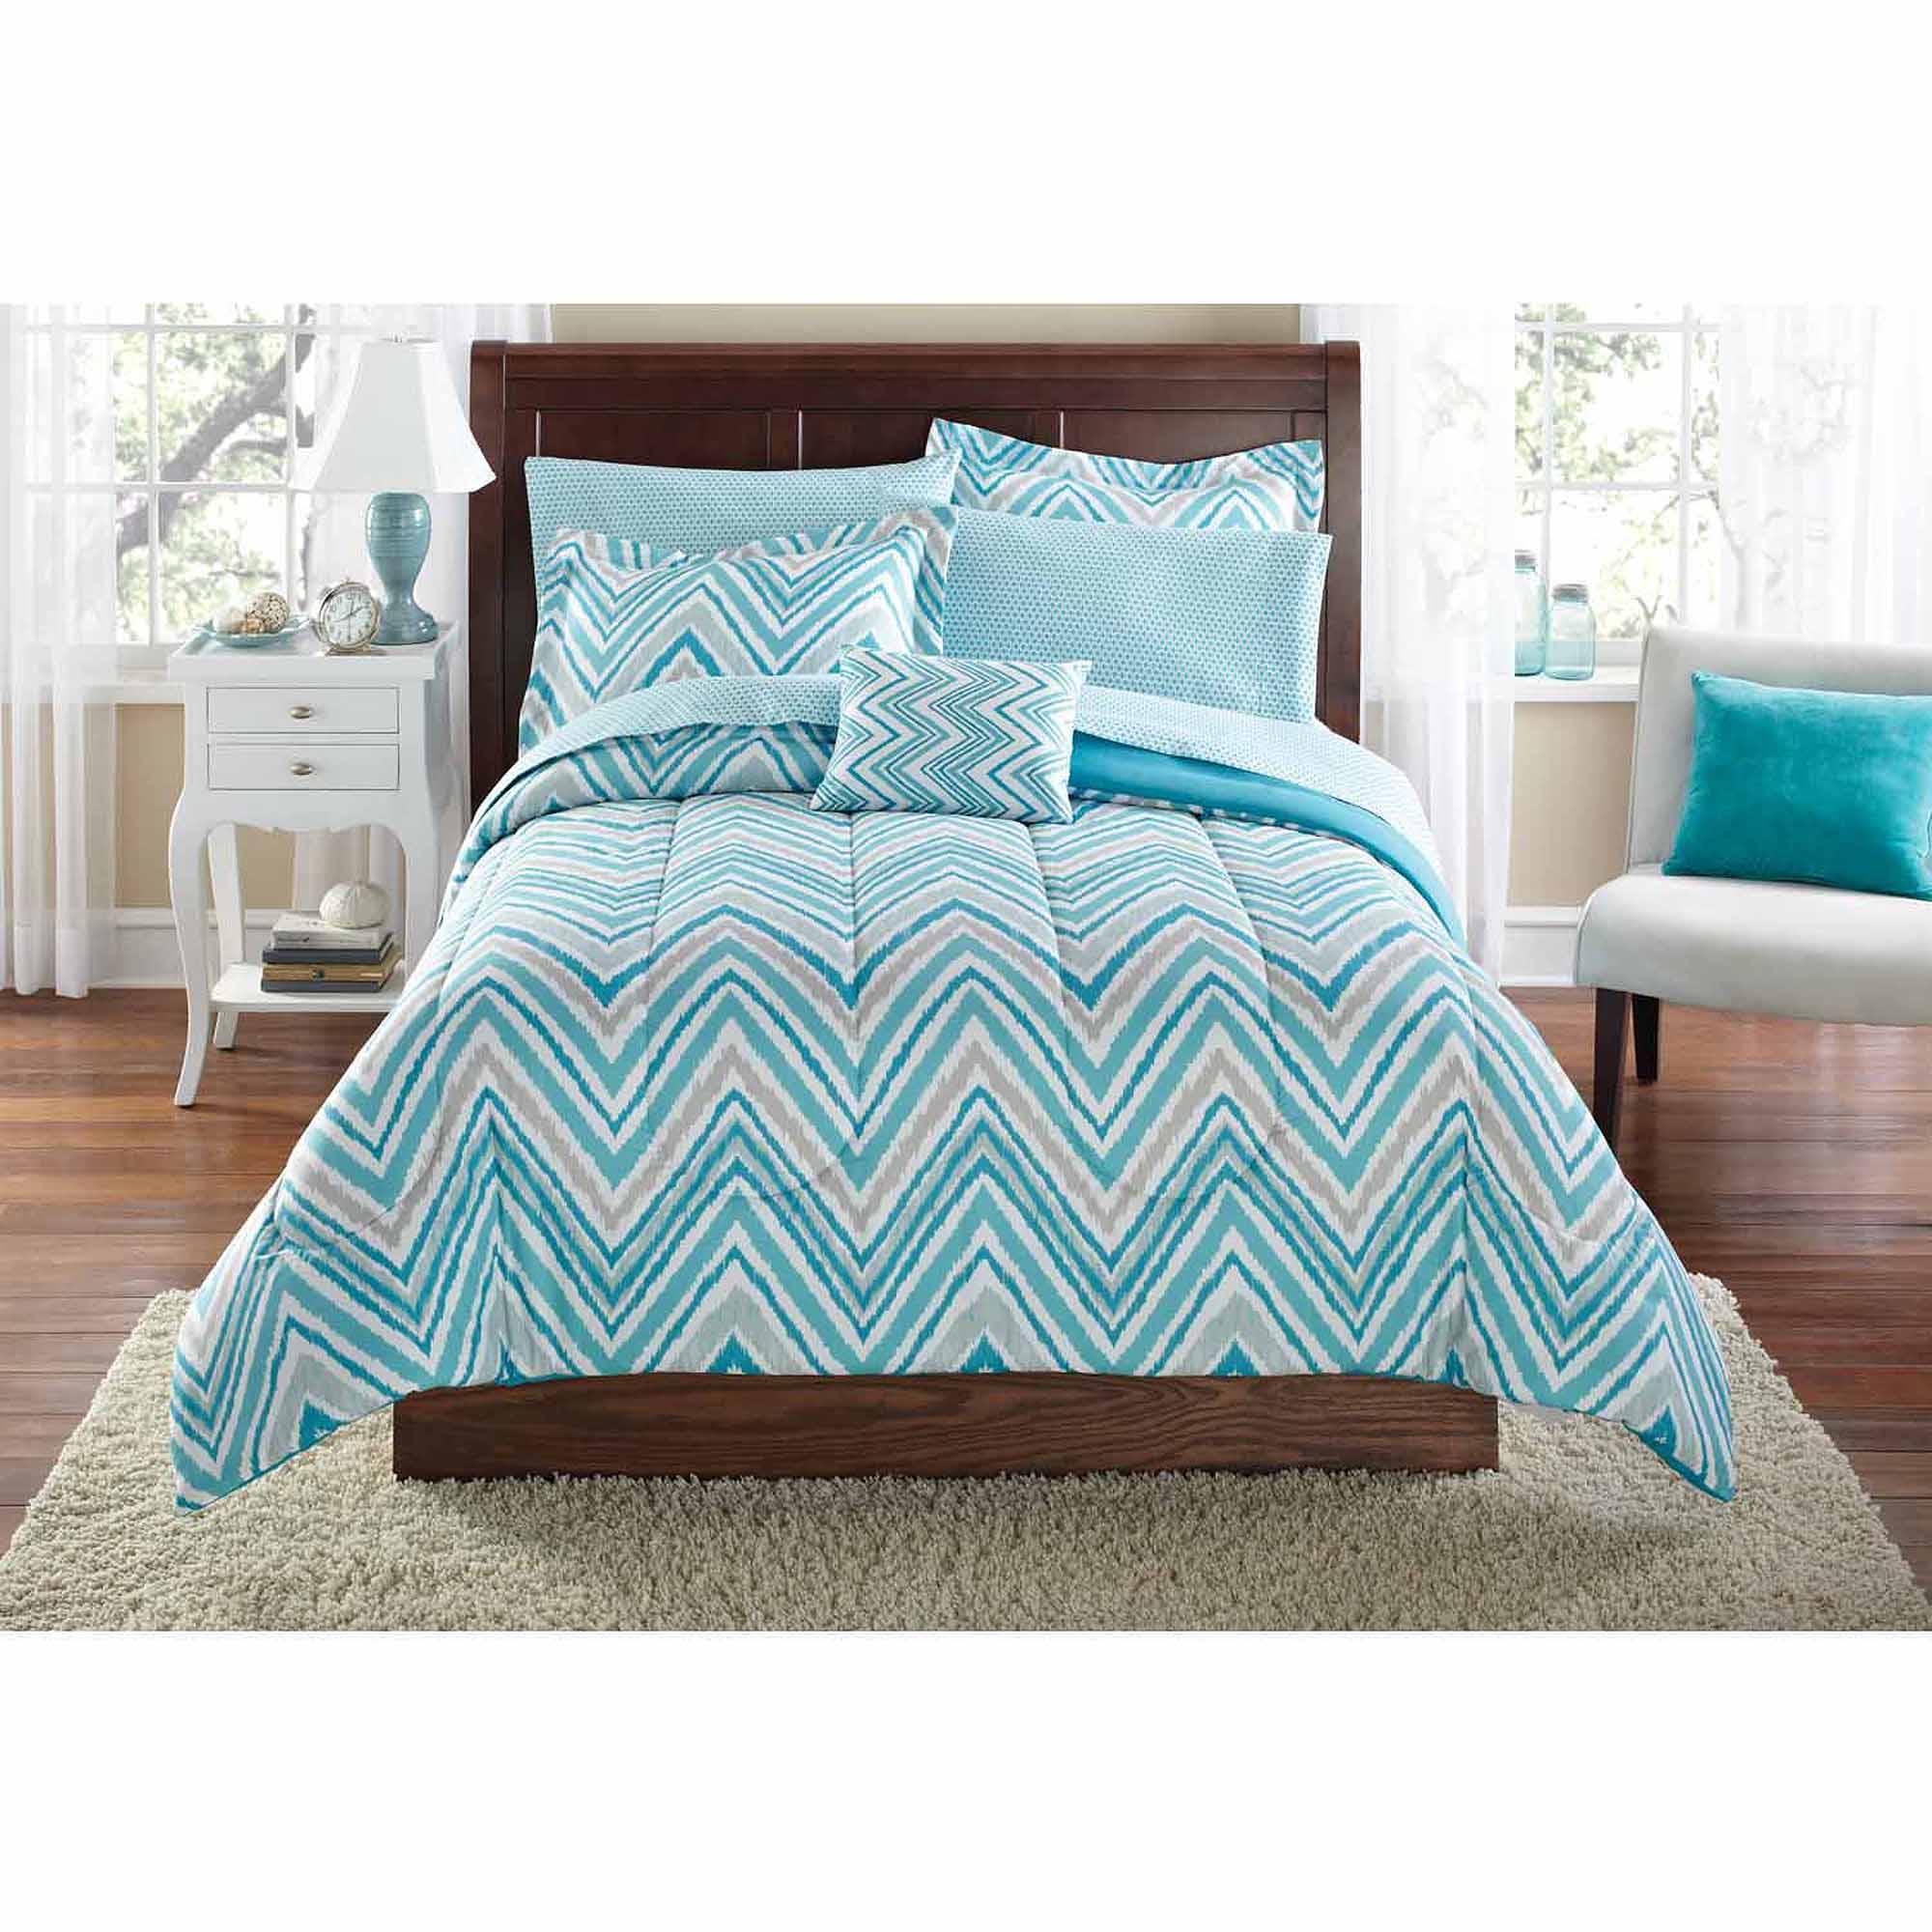 Bedding Sets Walmart Mainstays Watercolor Chevron Bed In A Bag 